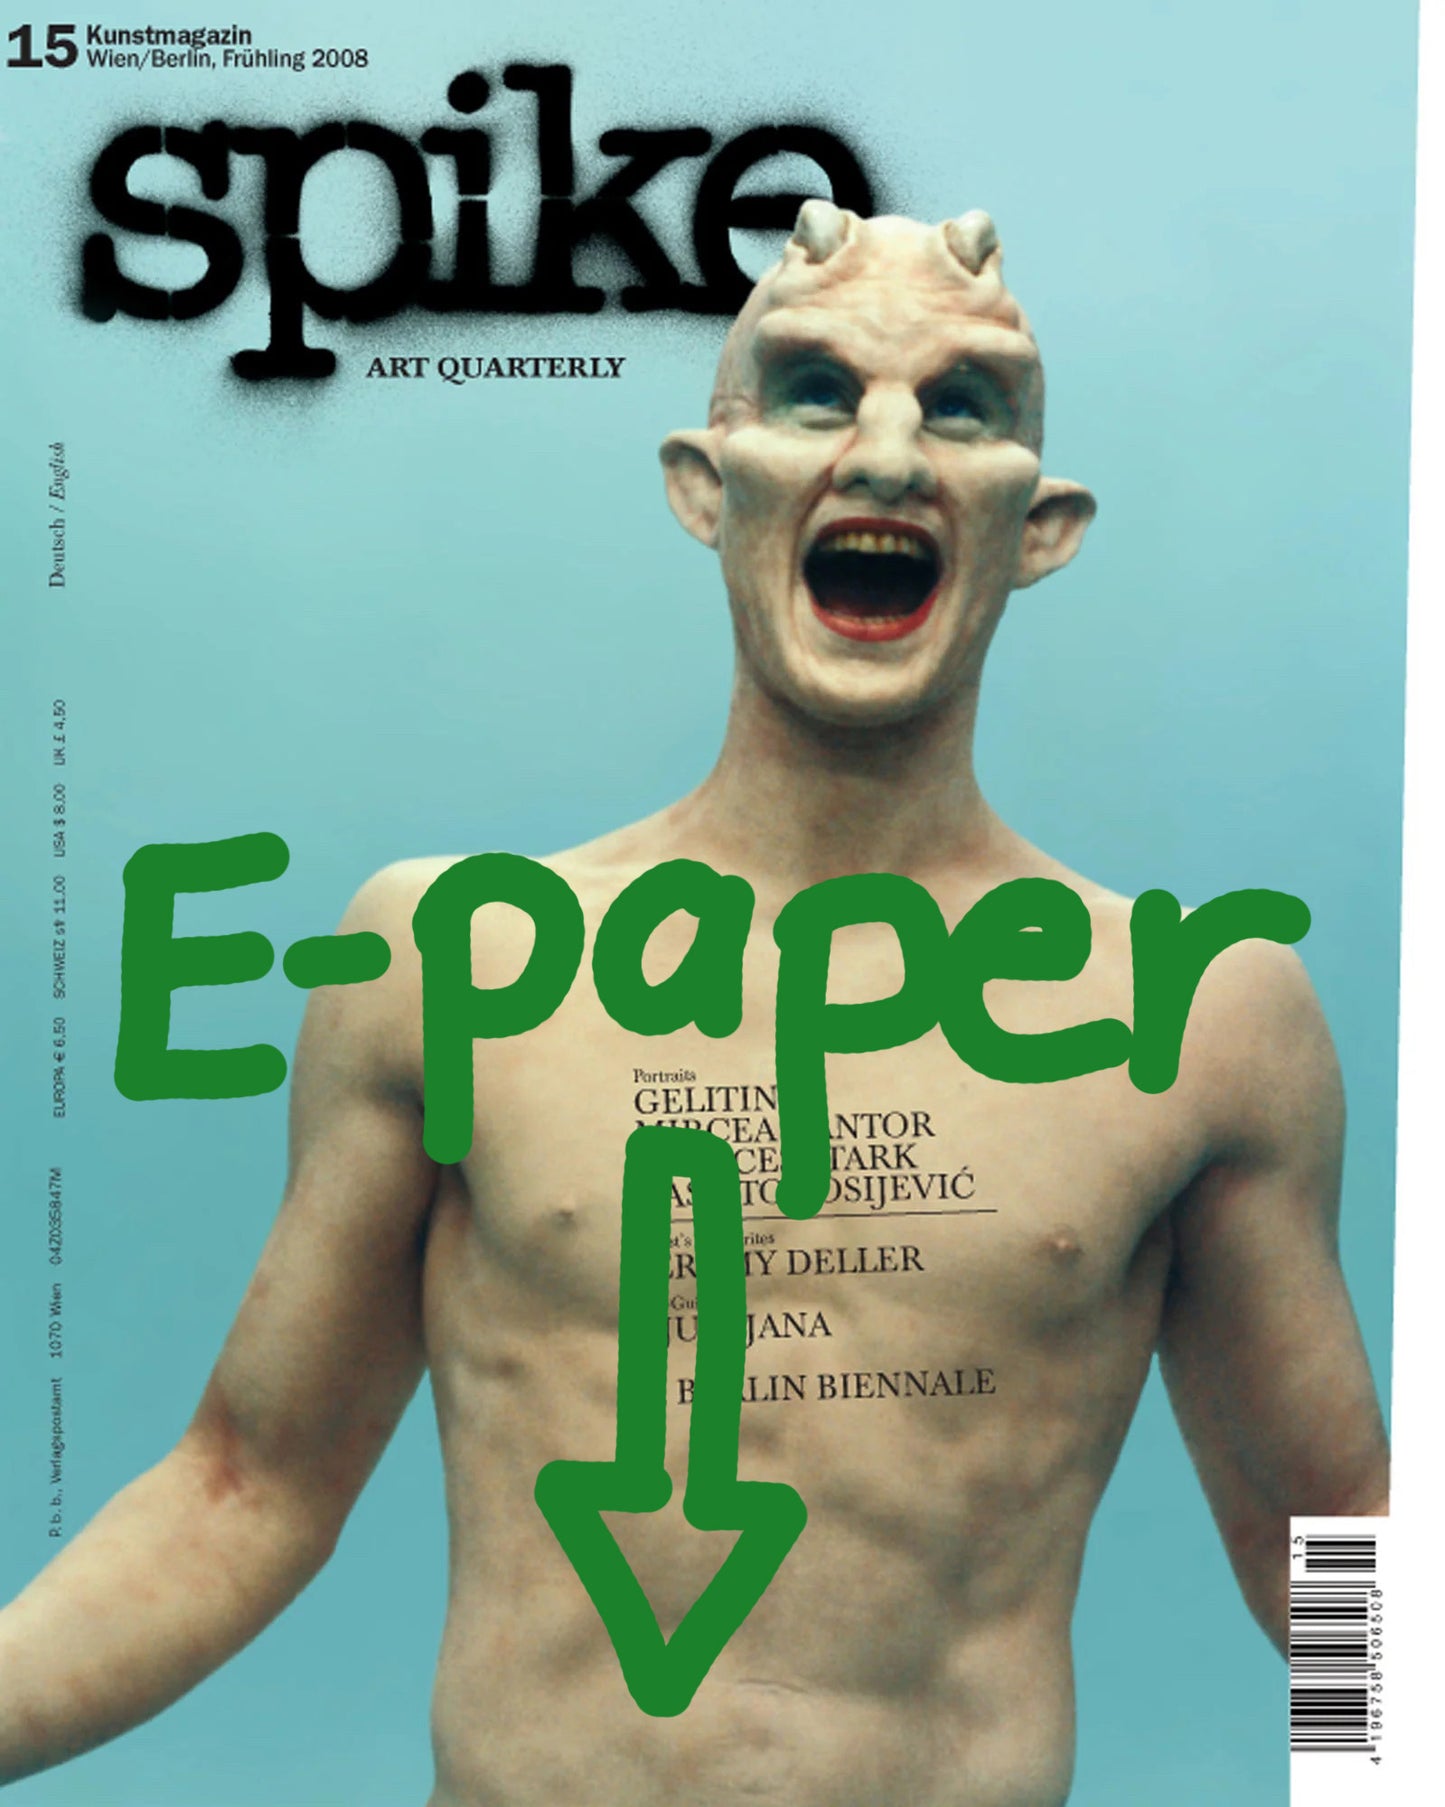 Spike ePaper (Issue 15)